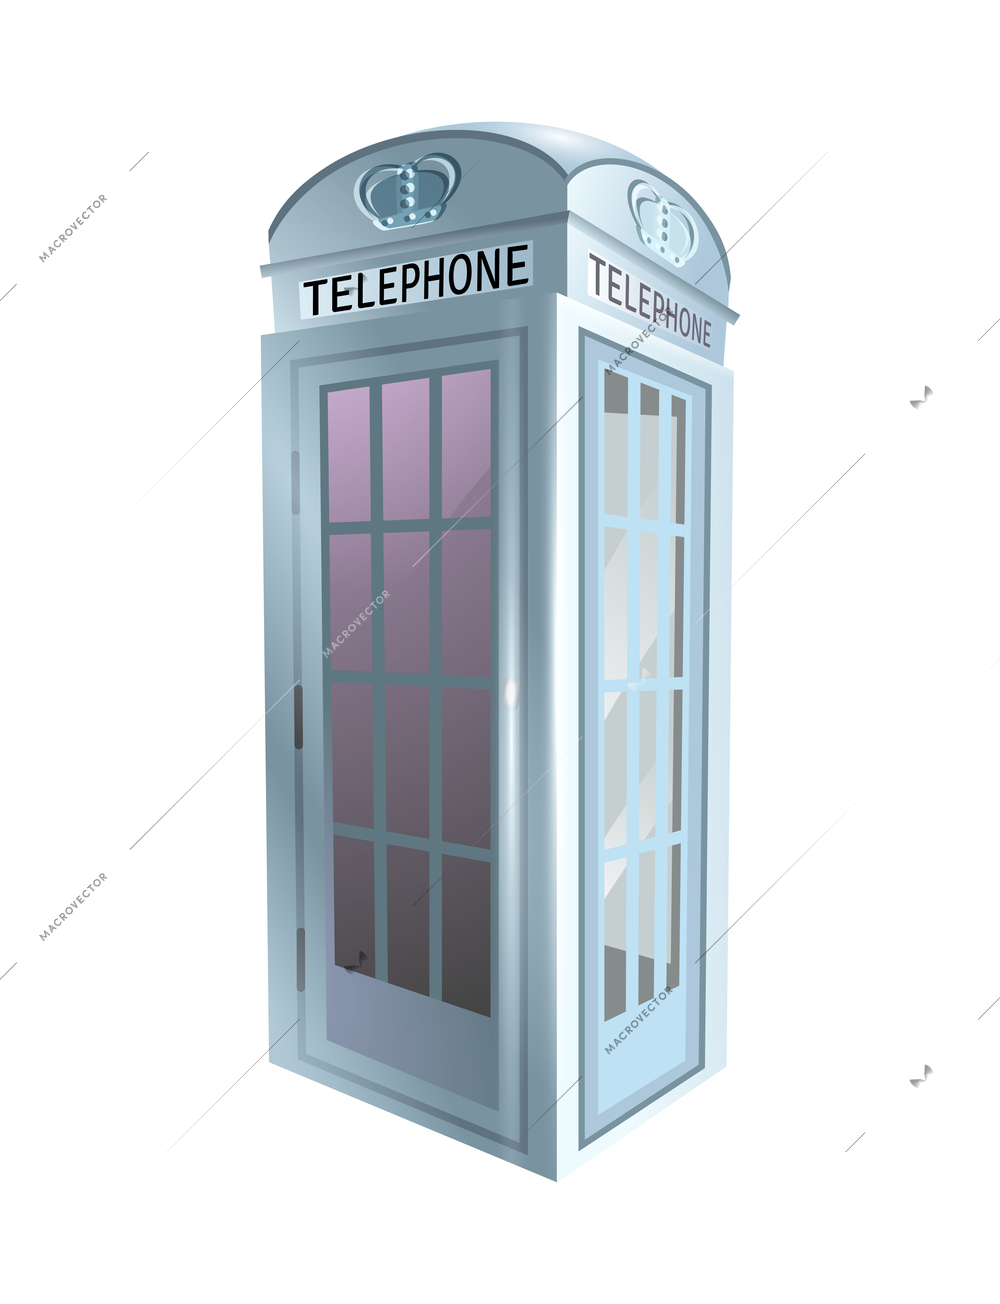 Realistic london telephone box vector illustration